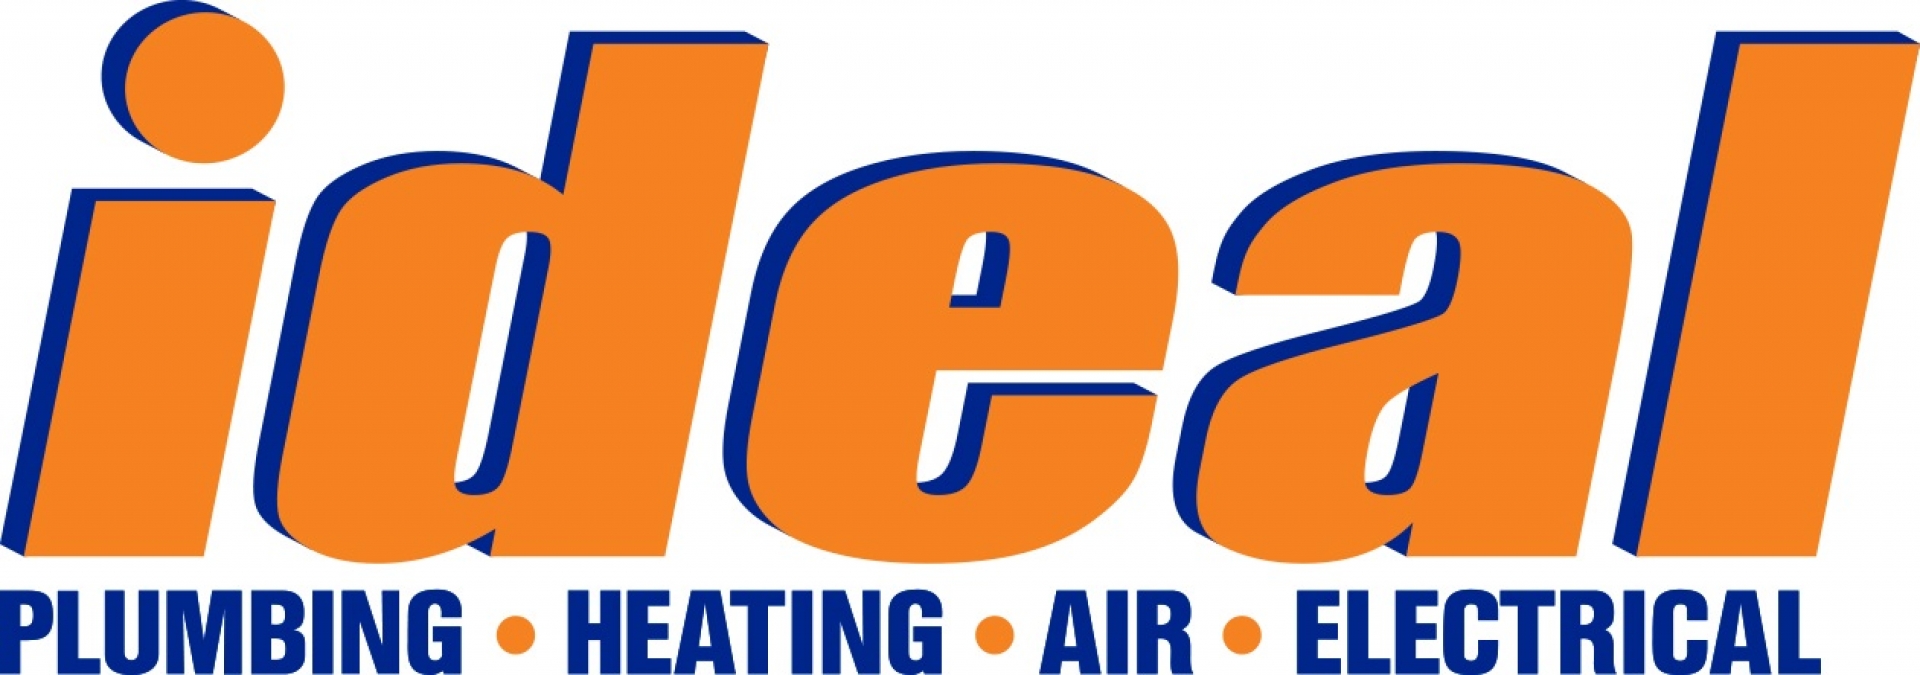 Ideal Plumbing Heating Air Electrical Inc company logo